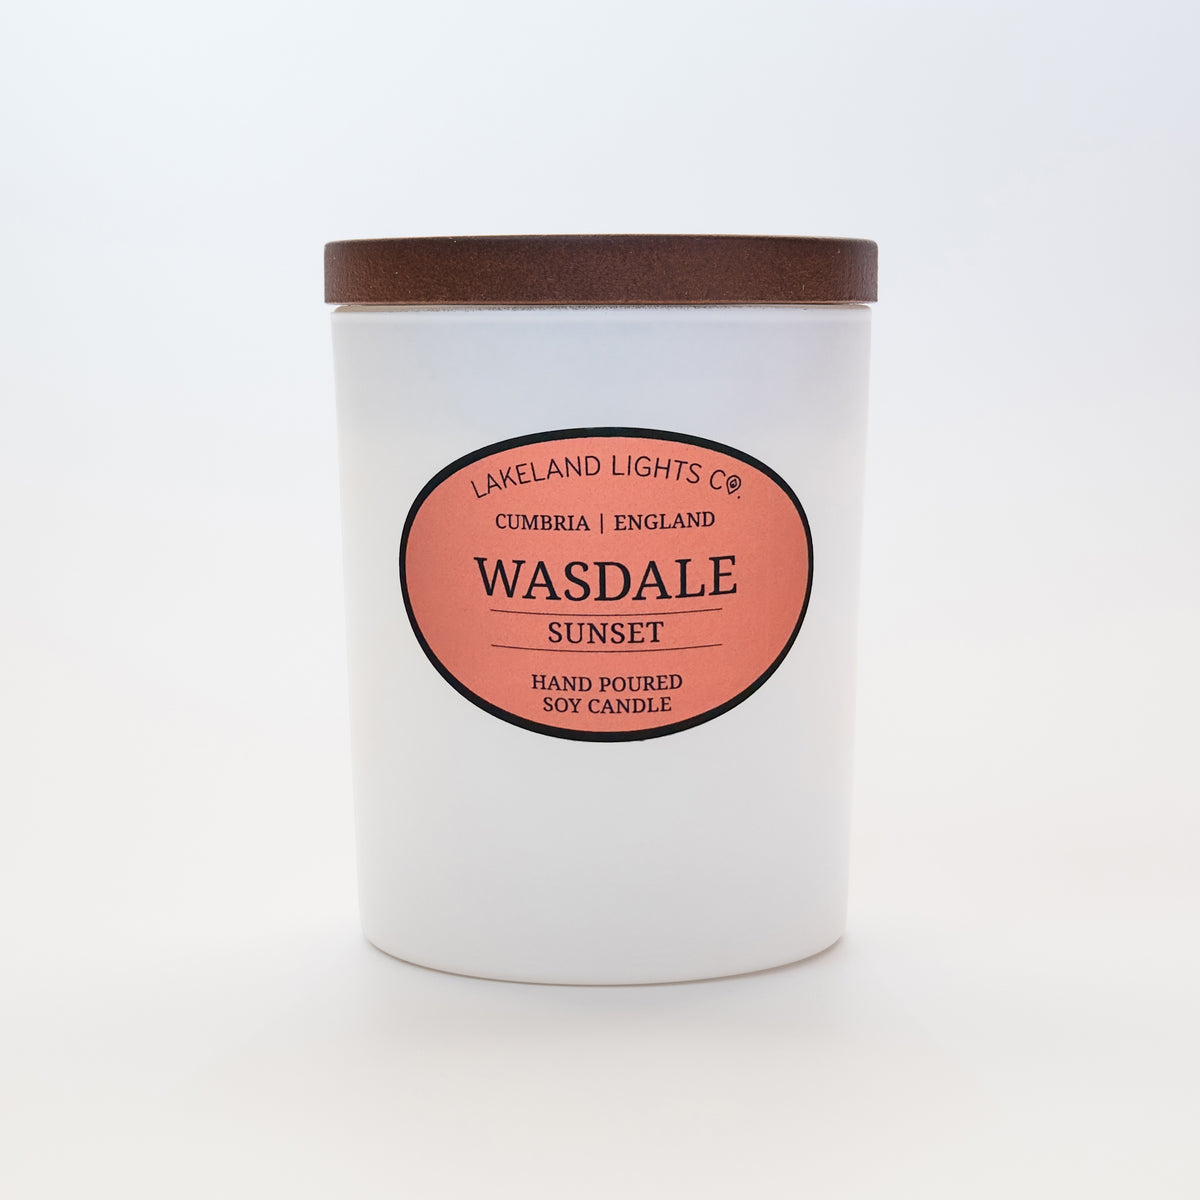 Wasdale